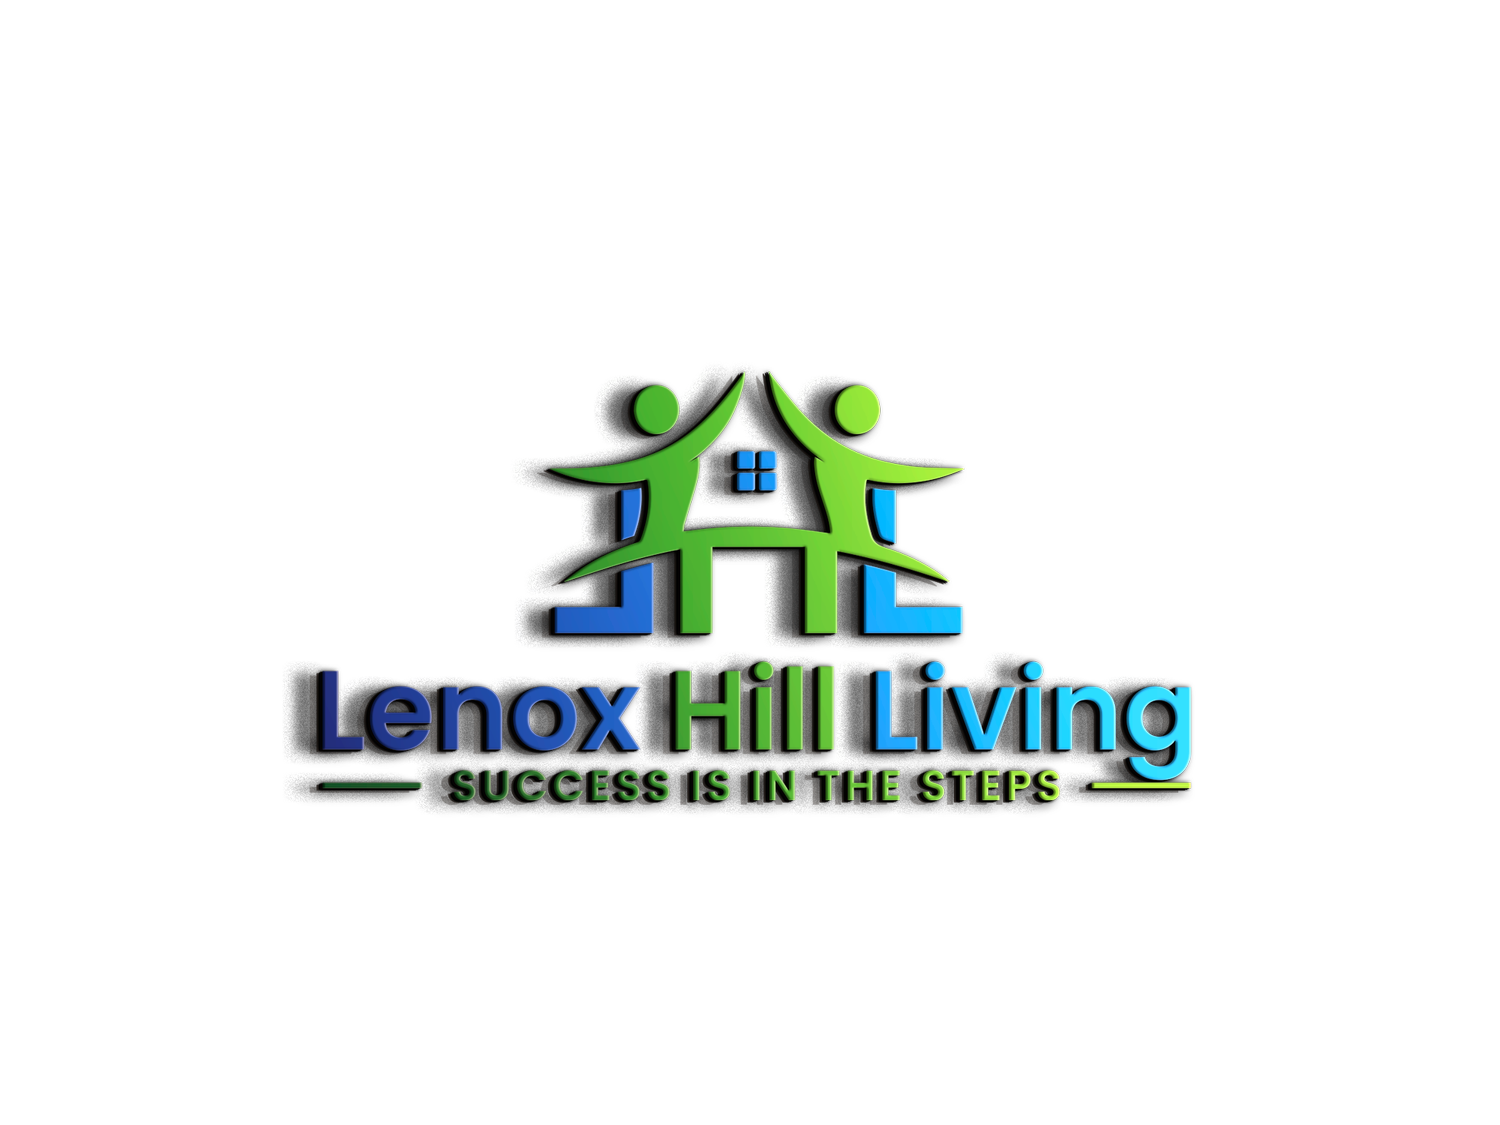 Lenox Hill Living